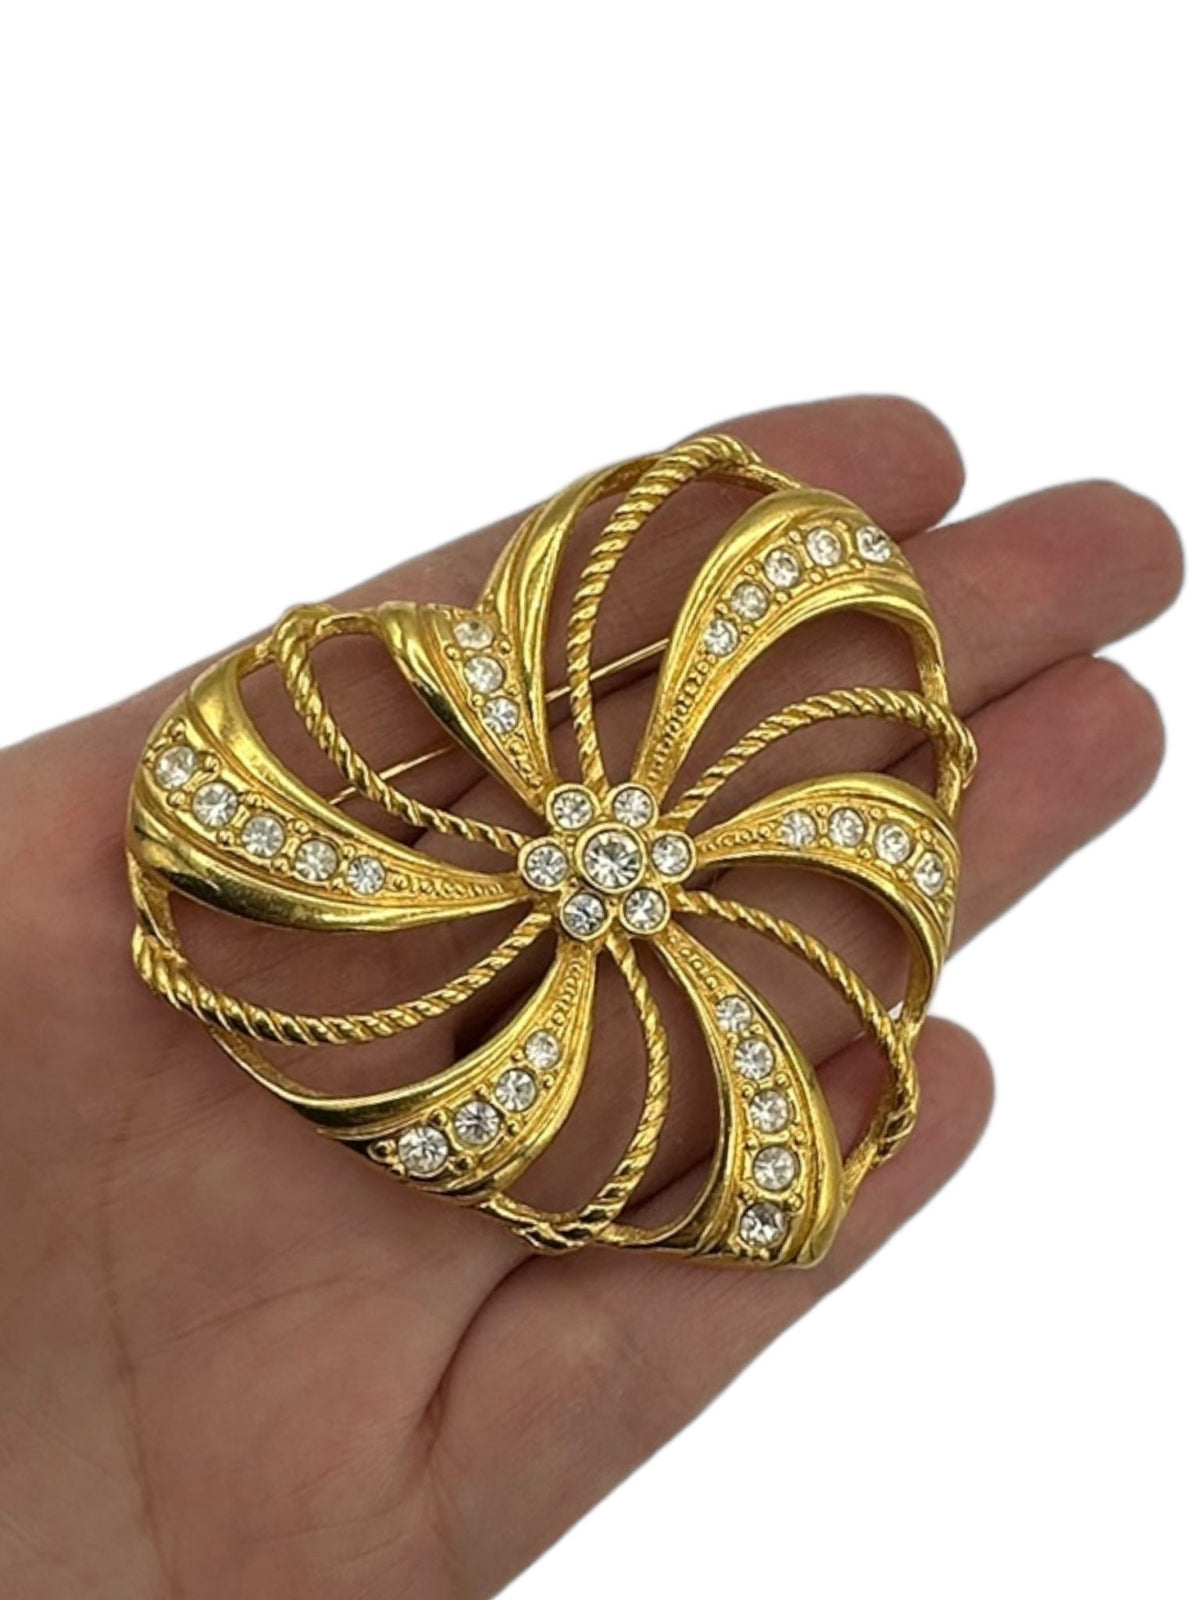 Gold Openwork Rhinestone Large Heart Romantic Trelles Avon Brooch - 24 Wishes Vintage Jewelry